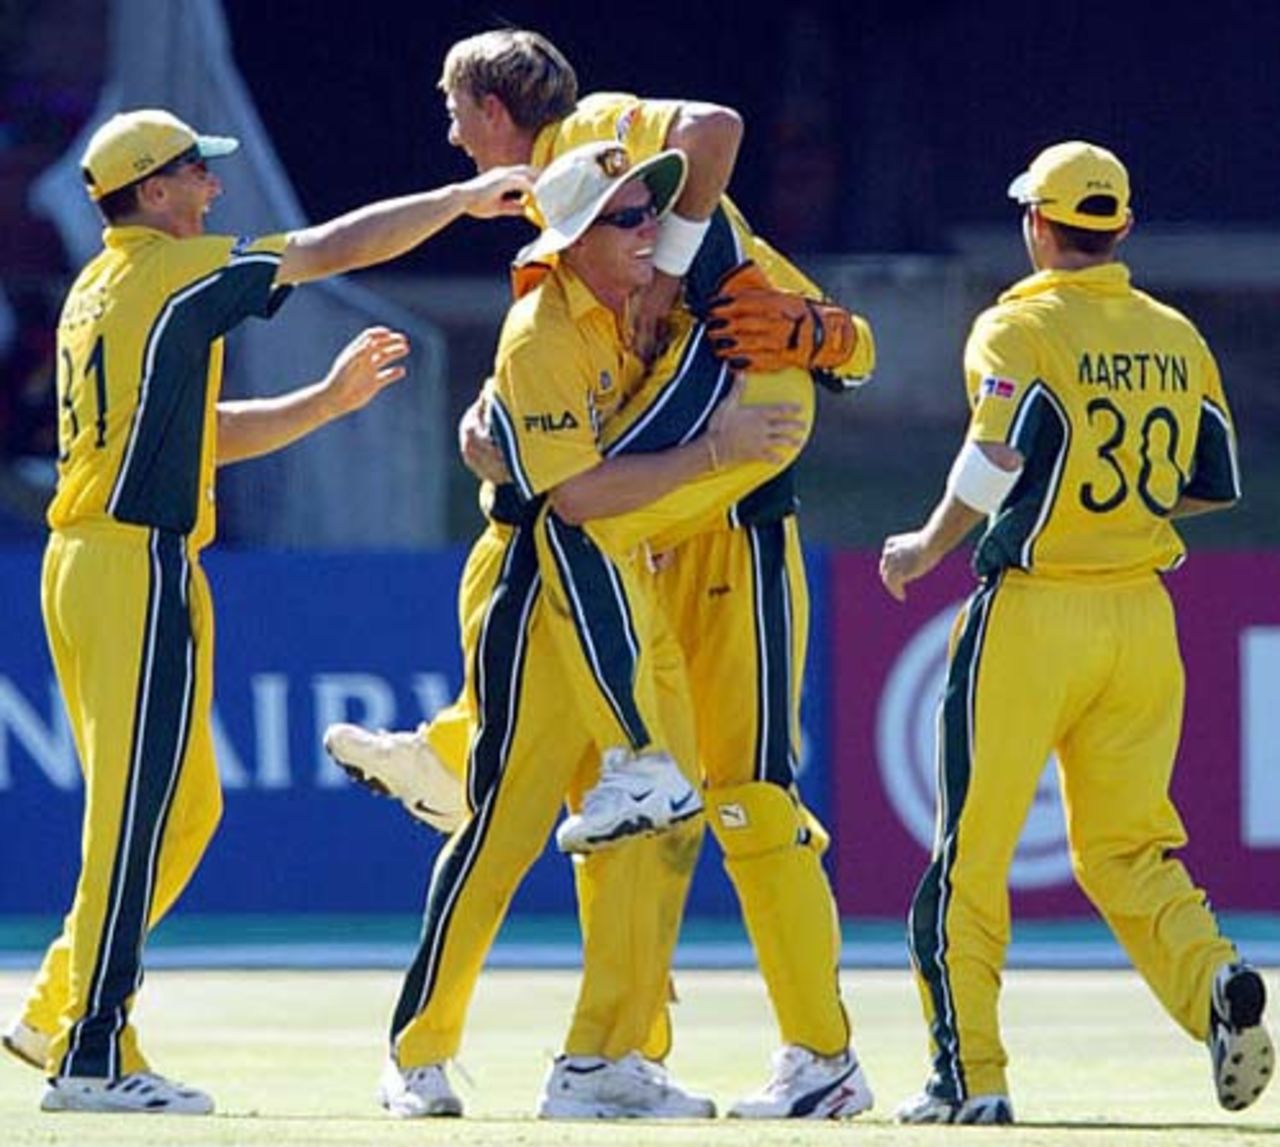 World Cup 2003 - Australia v New Zealand at Port Elizabeth, 11th March 2003